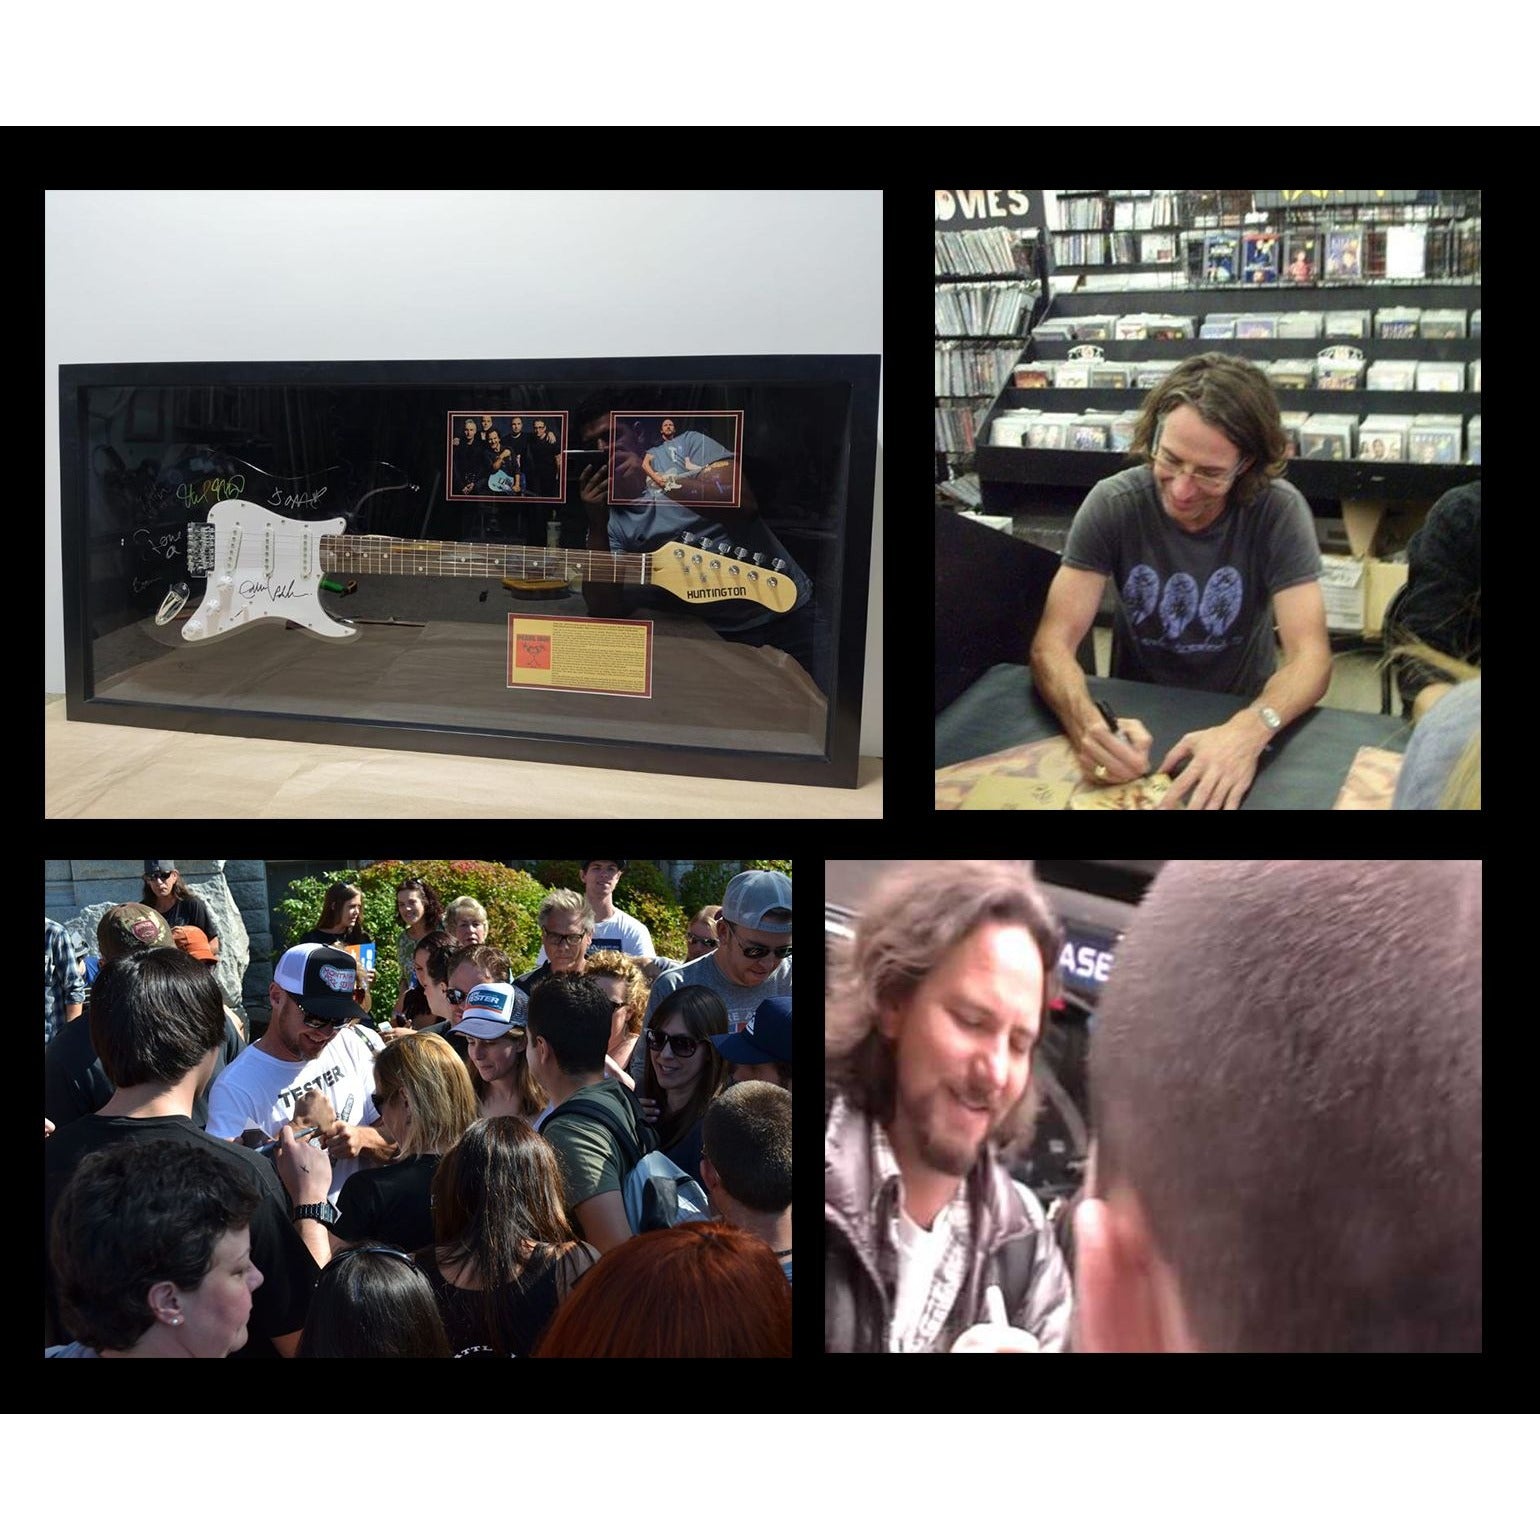 Eddie Vedder Jeff Ament, Stone Gossard, Matt Cameron Mike McCready Pearl Jam framed guitar signed with proof